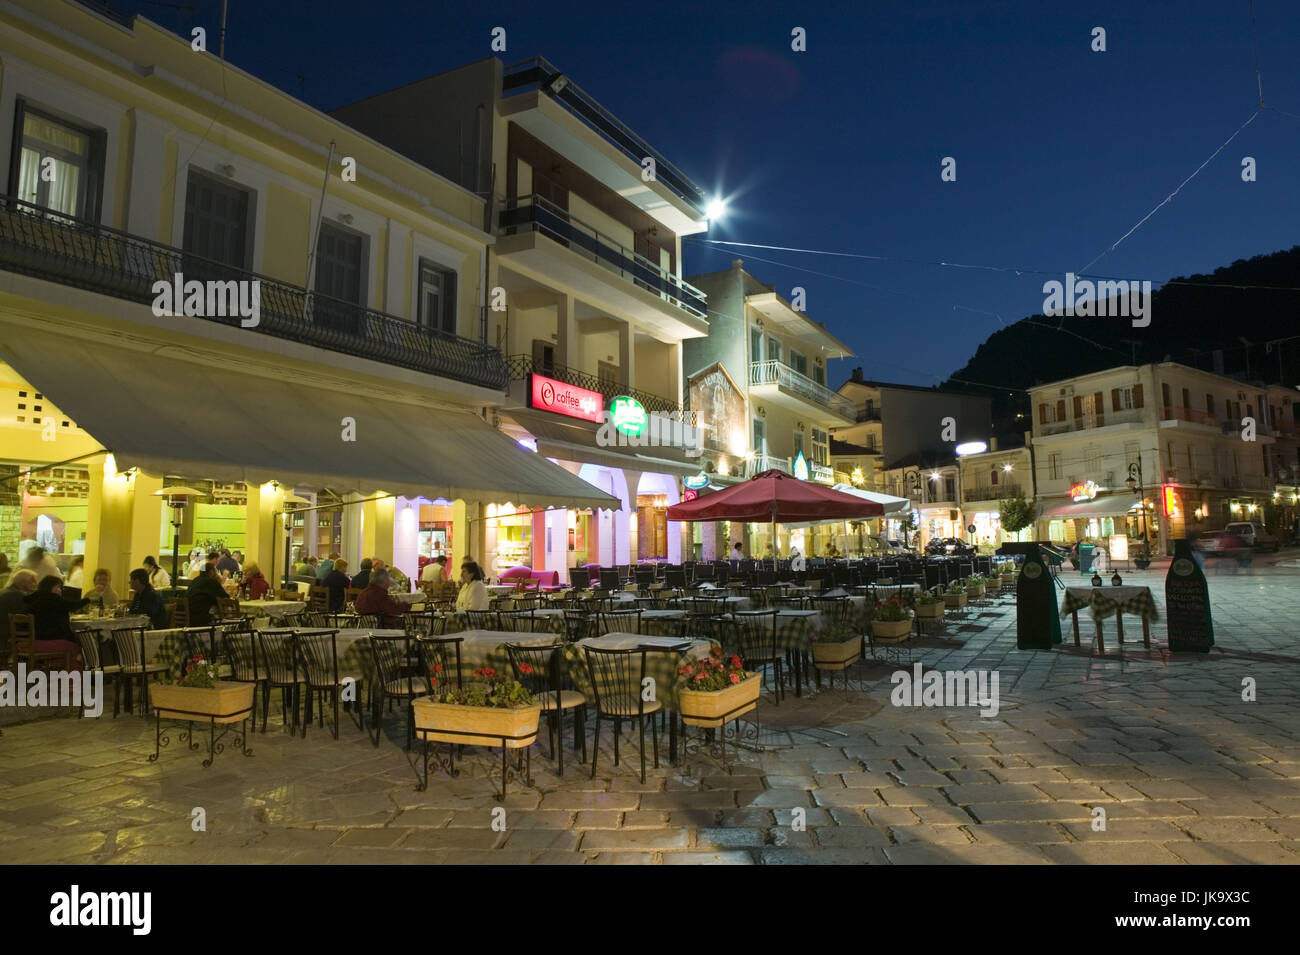 Platz agiou markou hi-res stock photography and images - Alamy